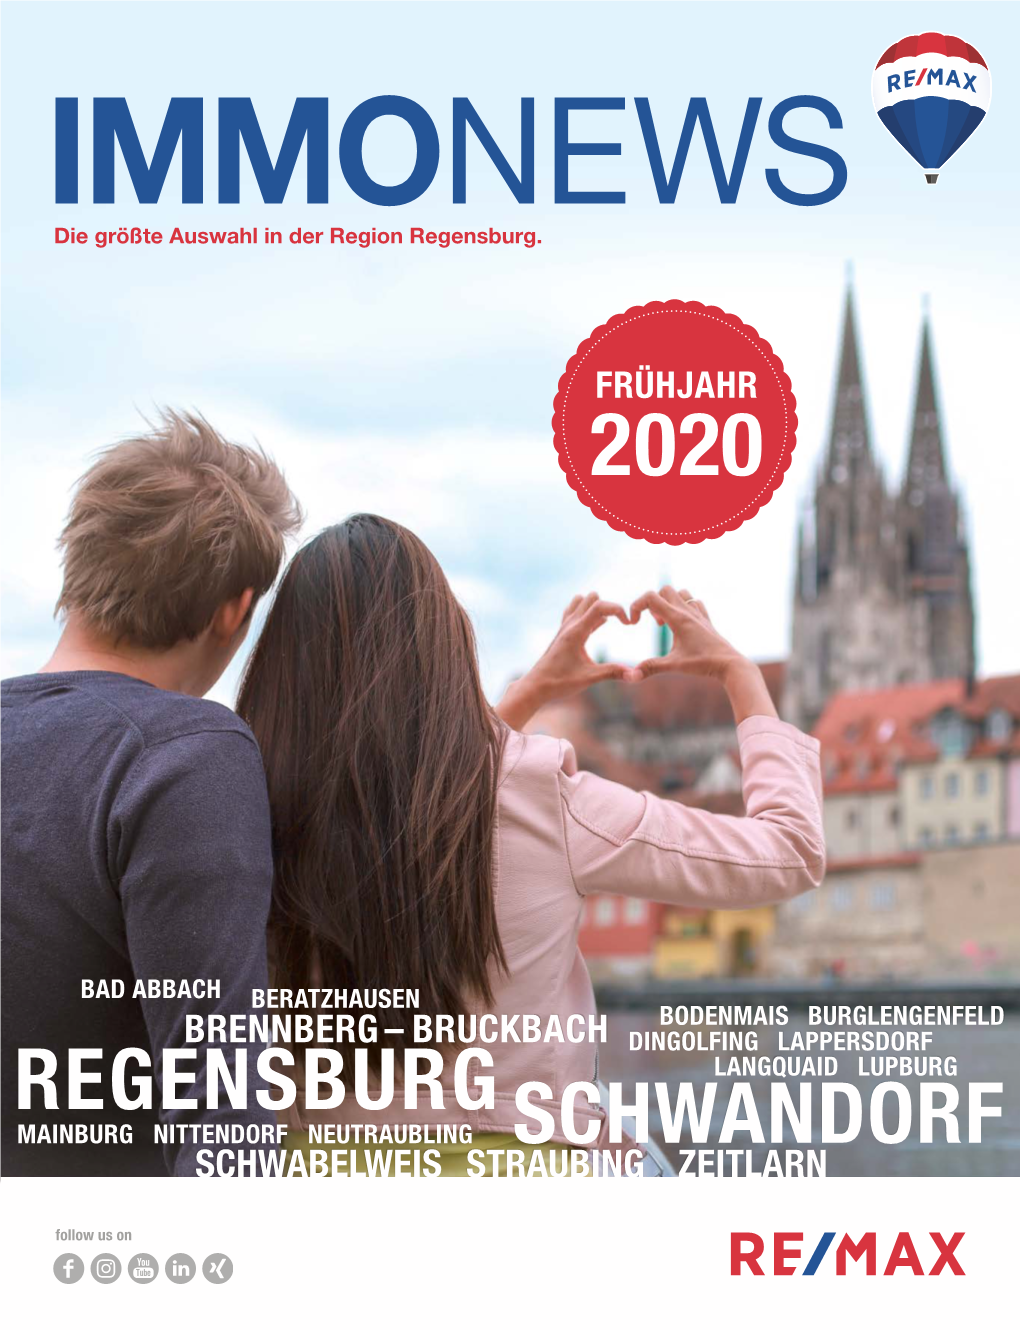 IMMONEWS MZ Fj 2020-04-13.Pdf